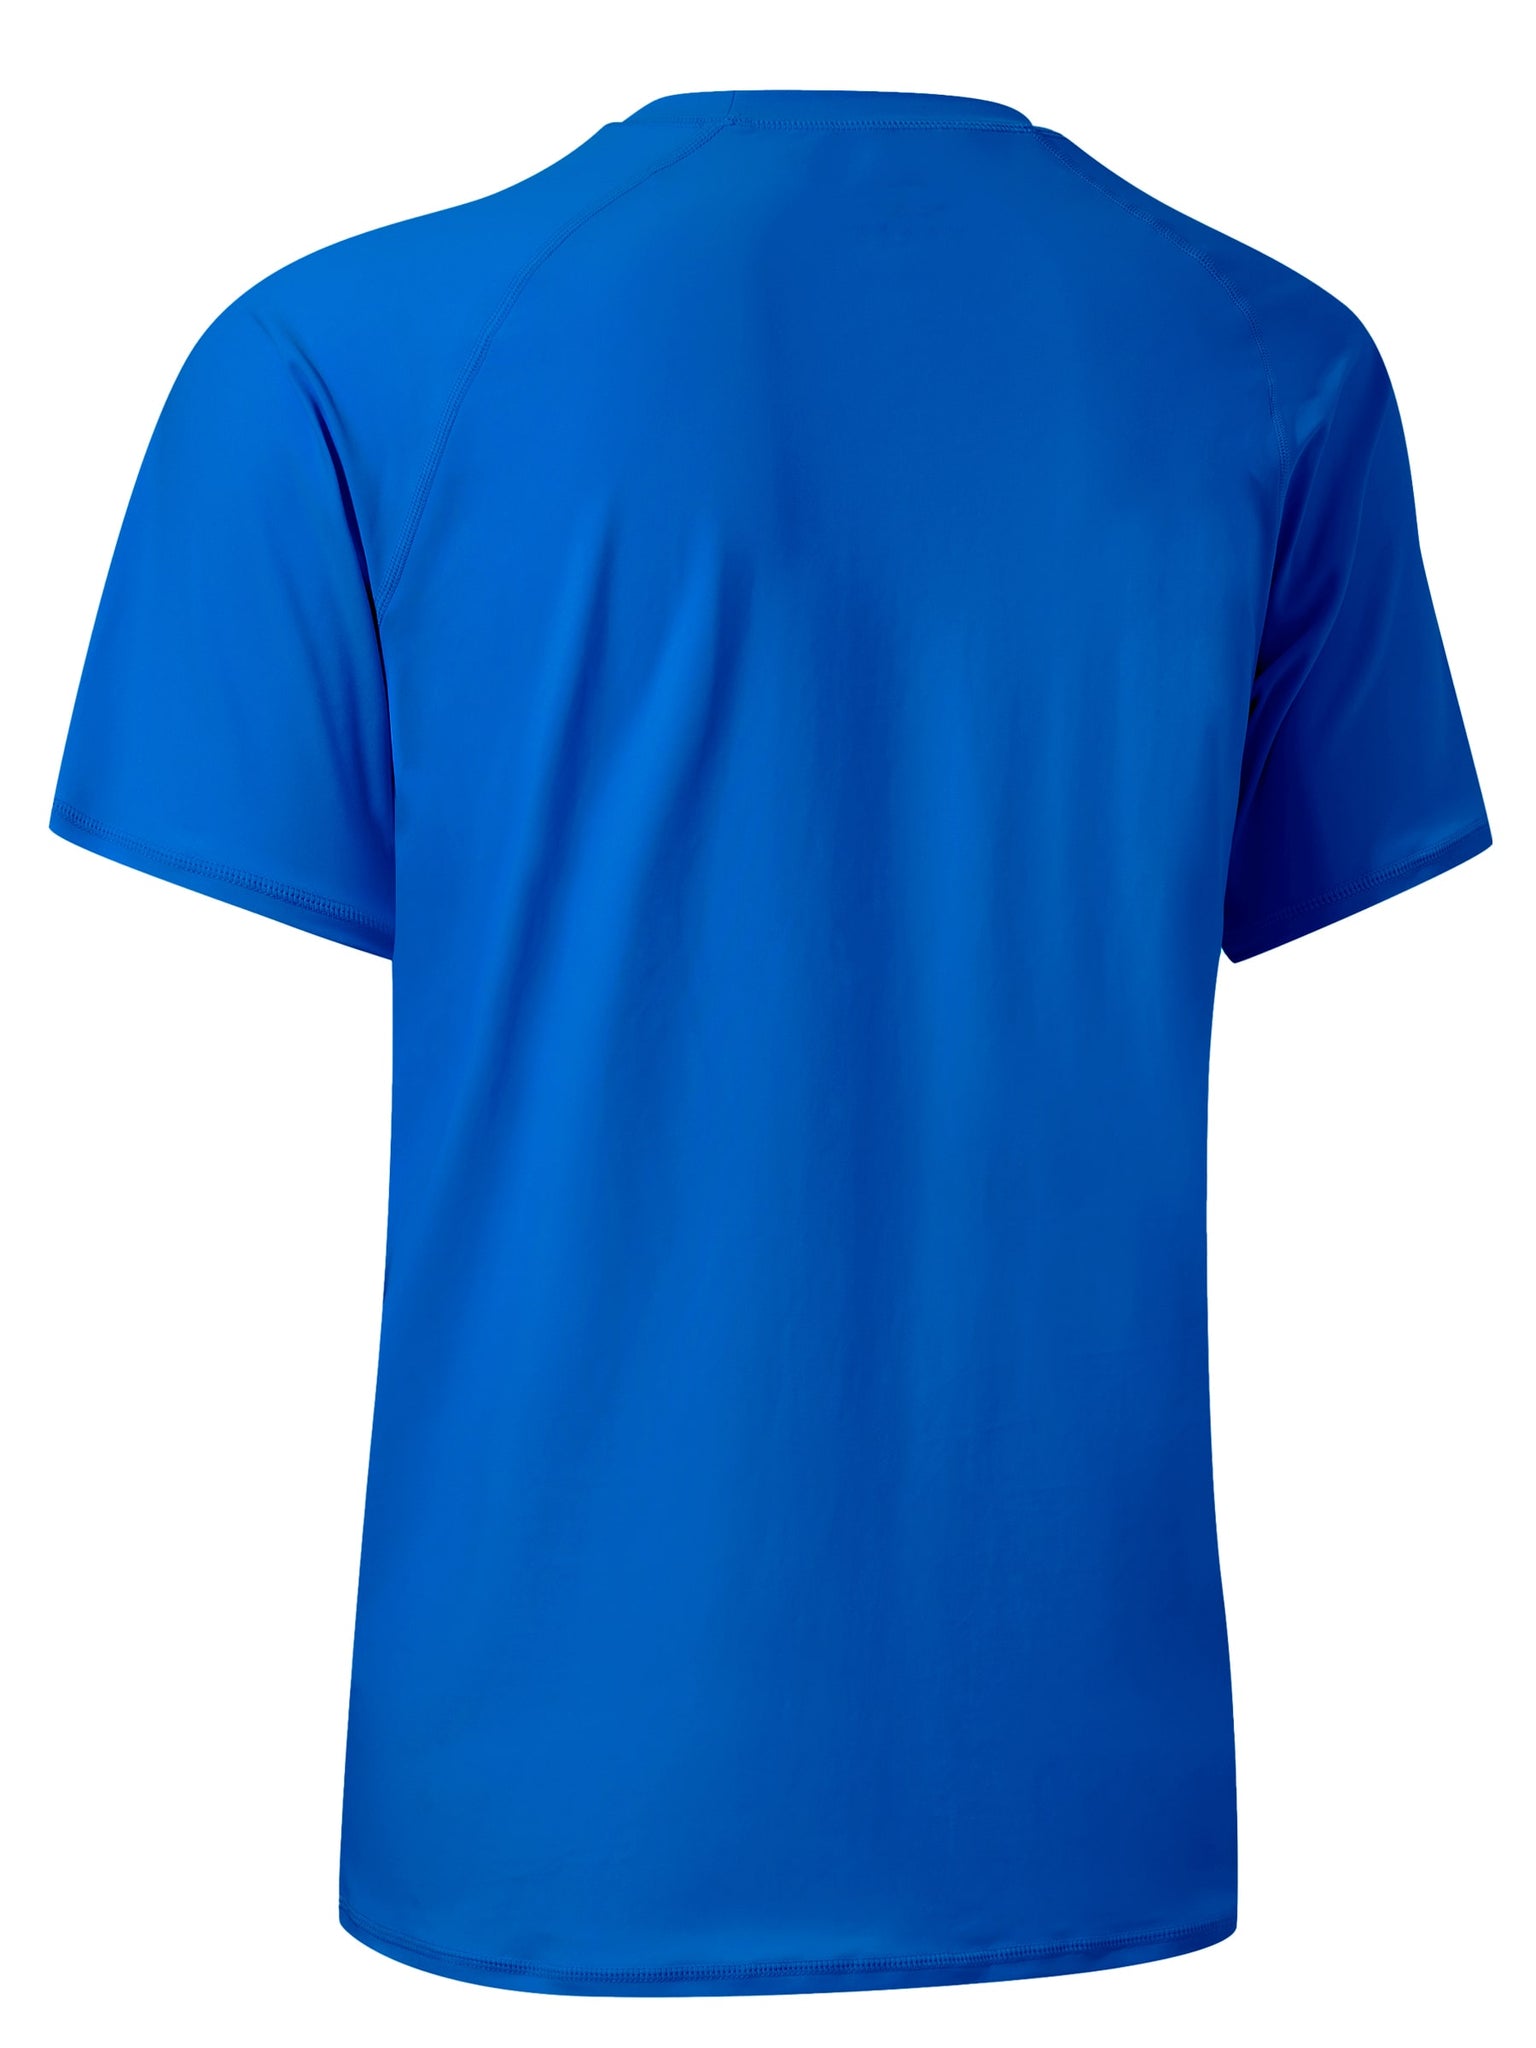 Men's Sun Protection Short Sleeve Shirt_BrilliantBlue_detail2